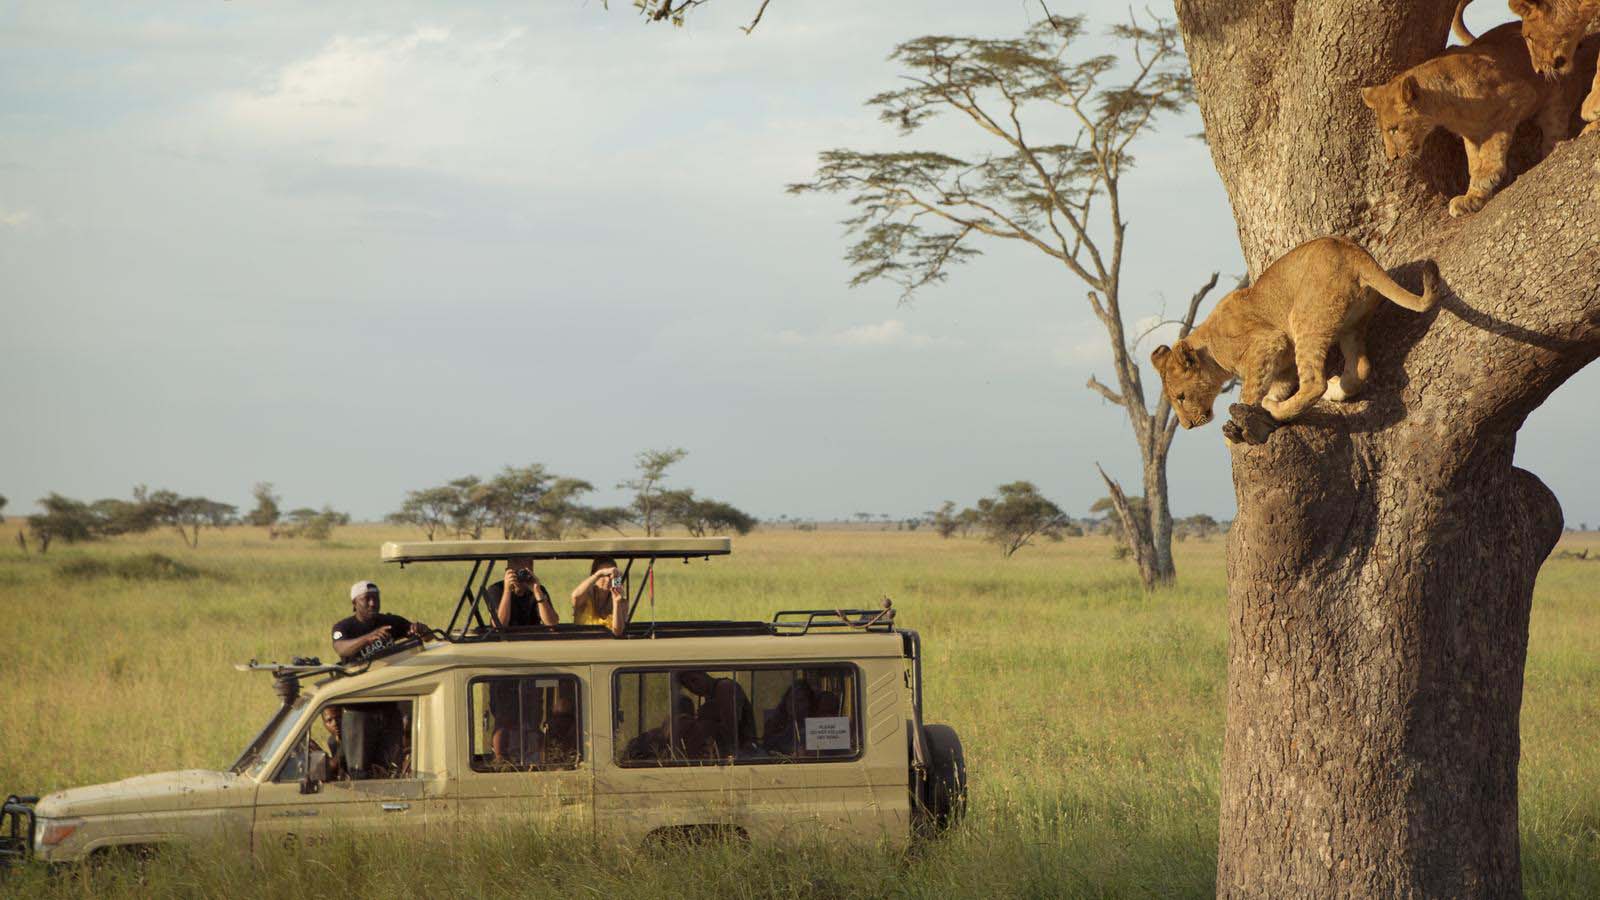 Tanzania holiday tours and safaris,